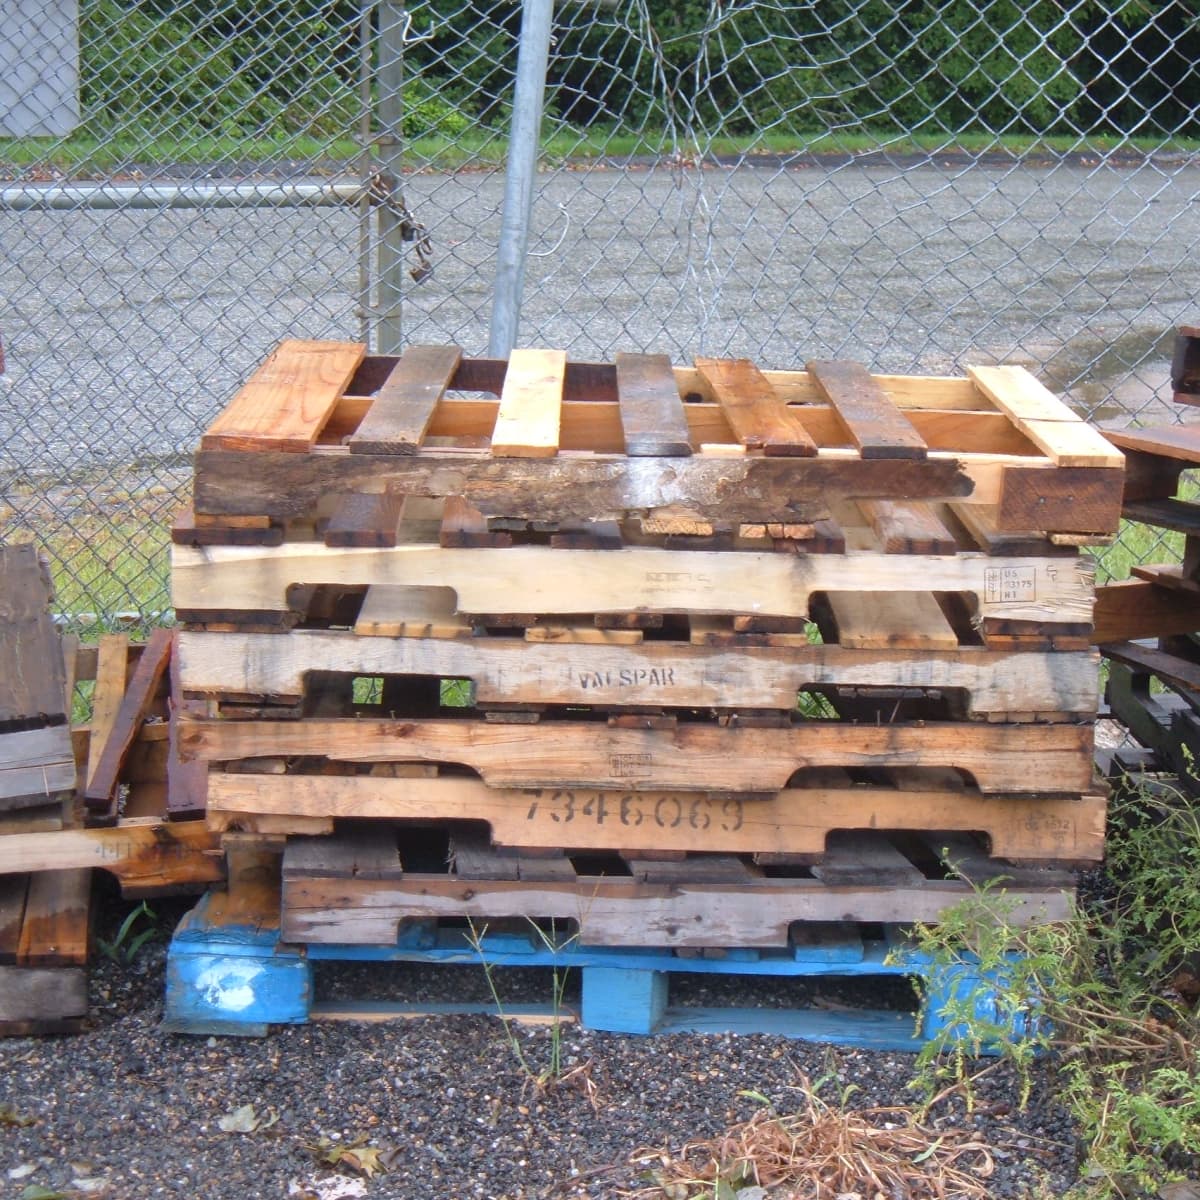 5 Ways to Dispose of Scrap Wood - Woodsmith